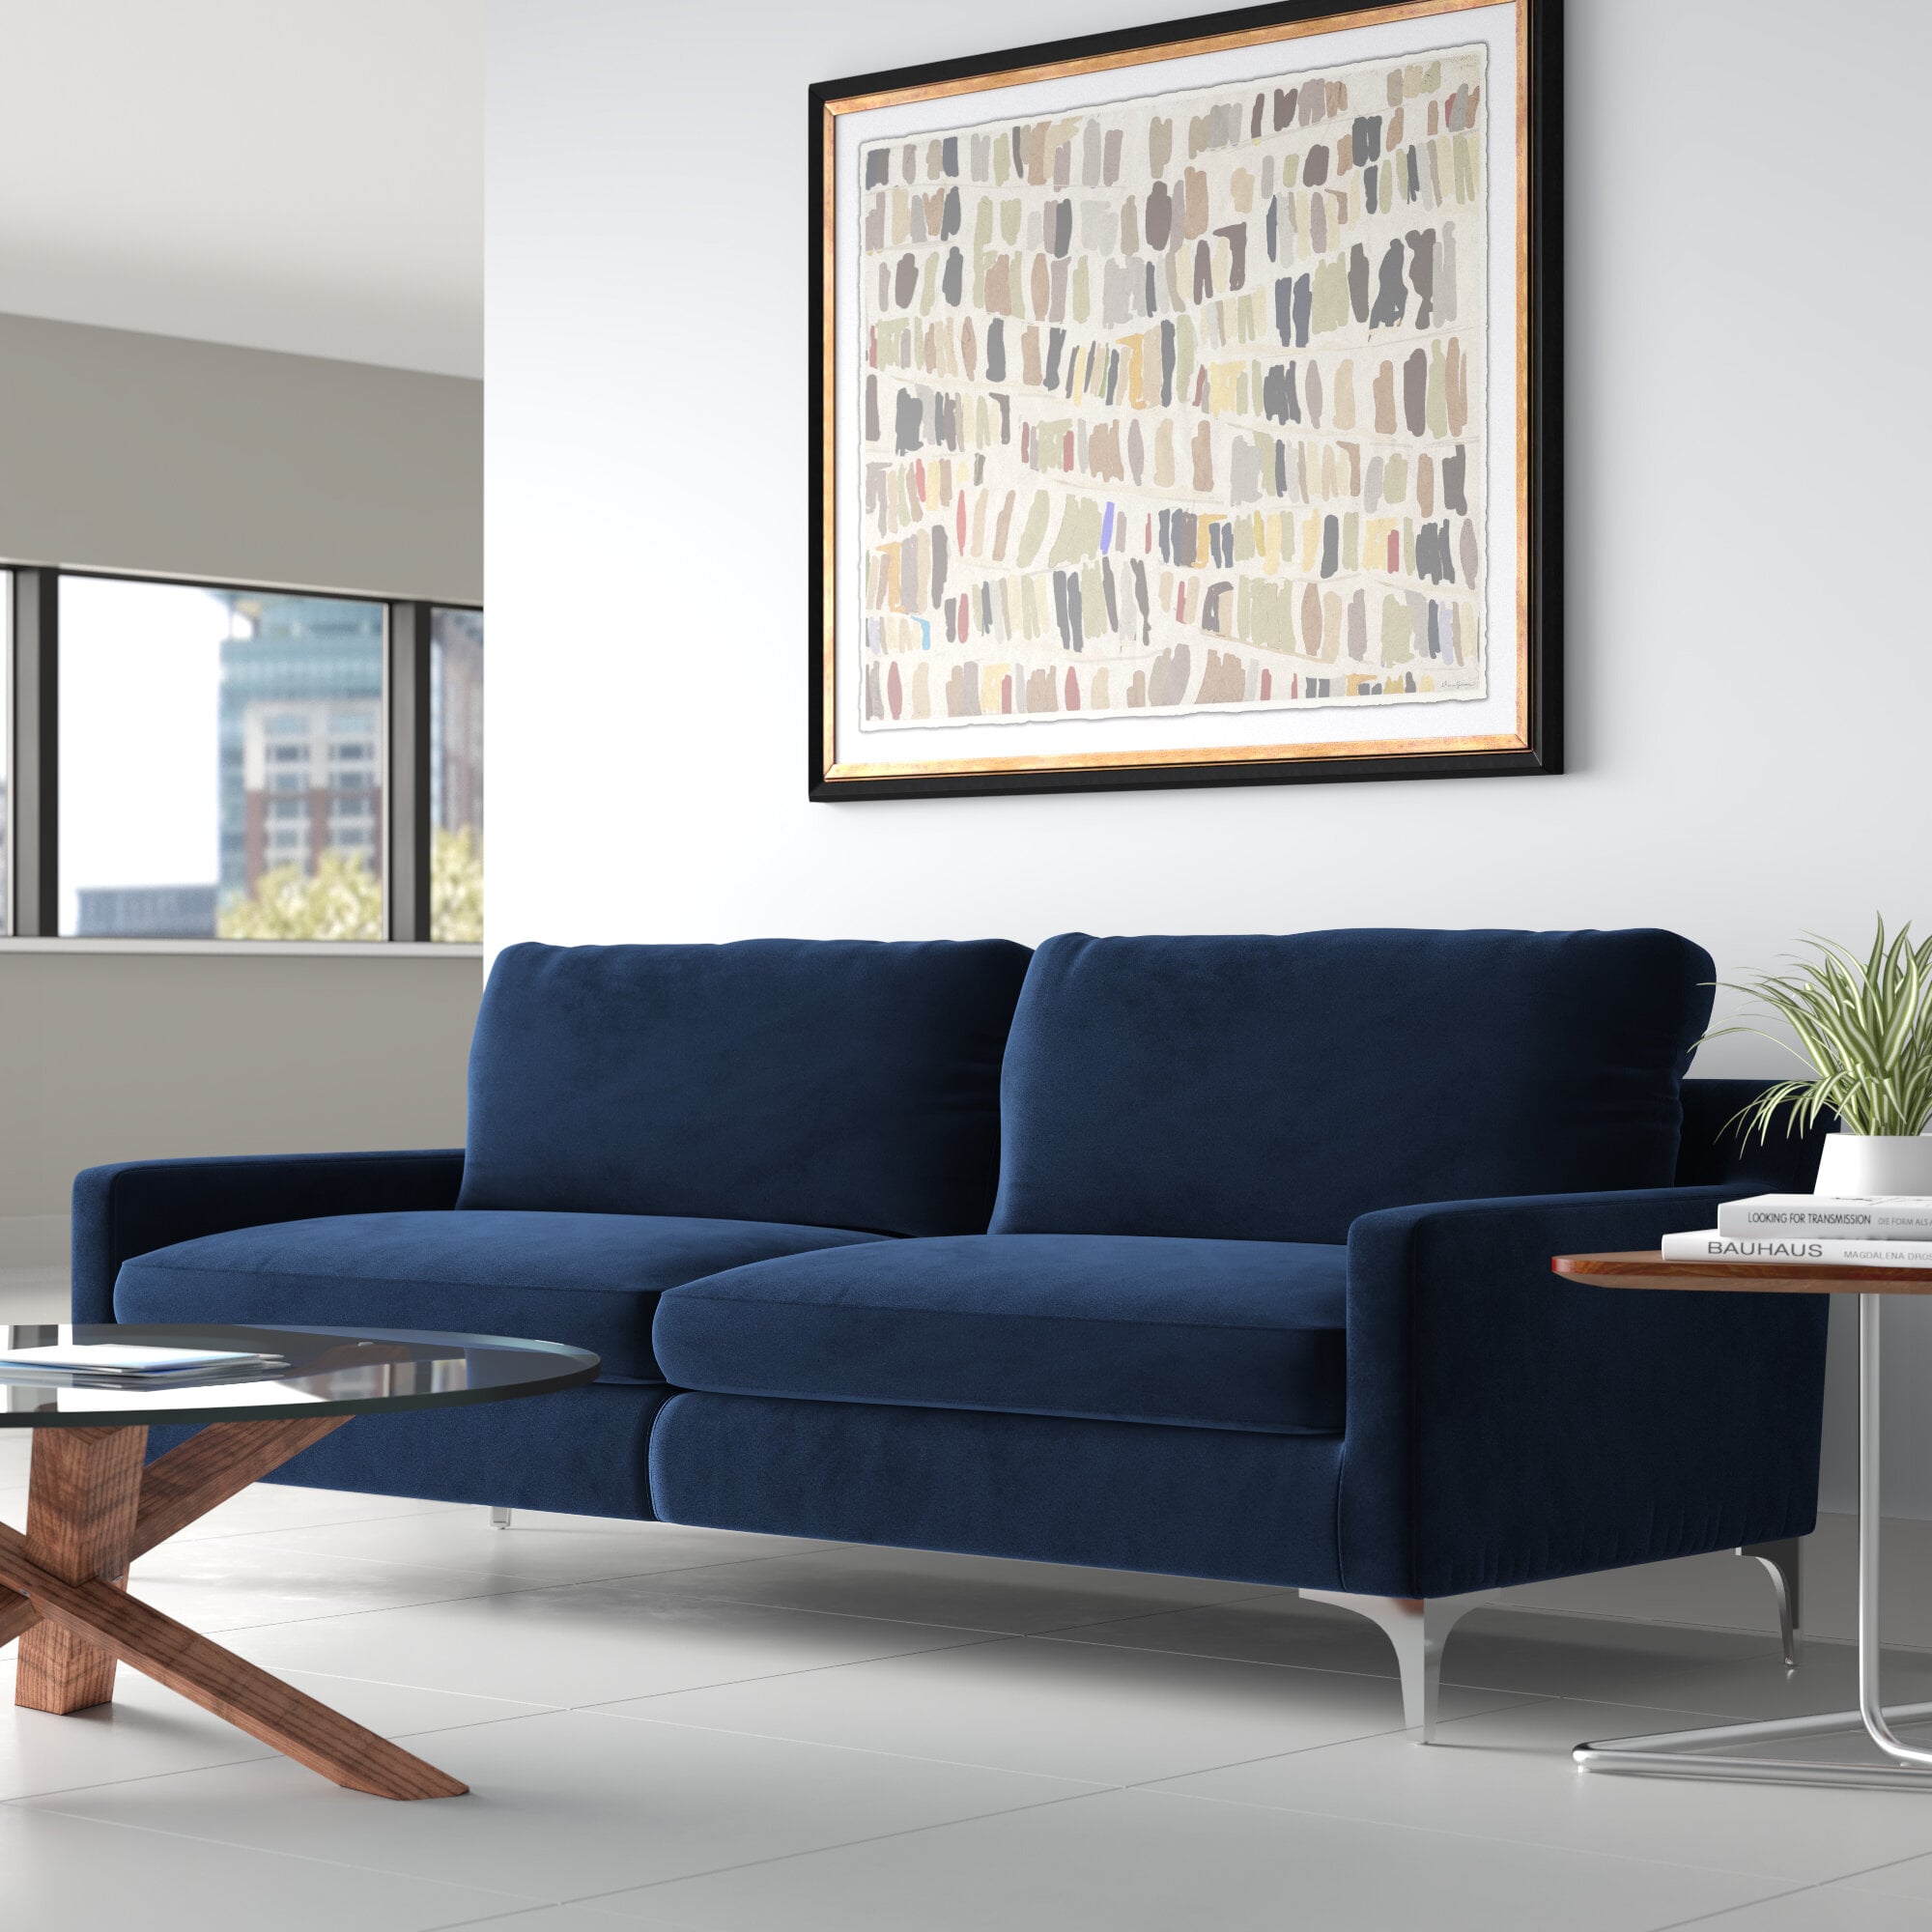 Best Living Room Furniture From Wayfair POPSUGAR Home